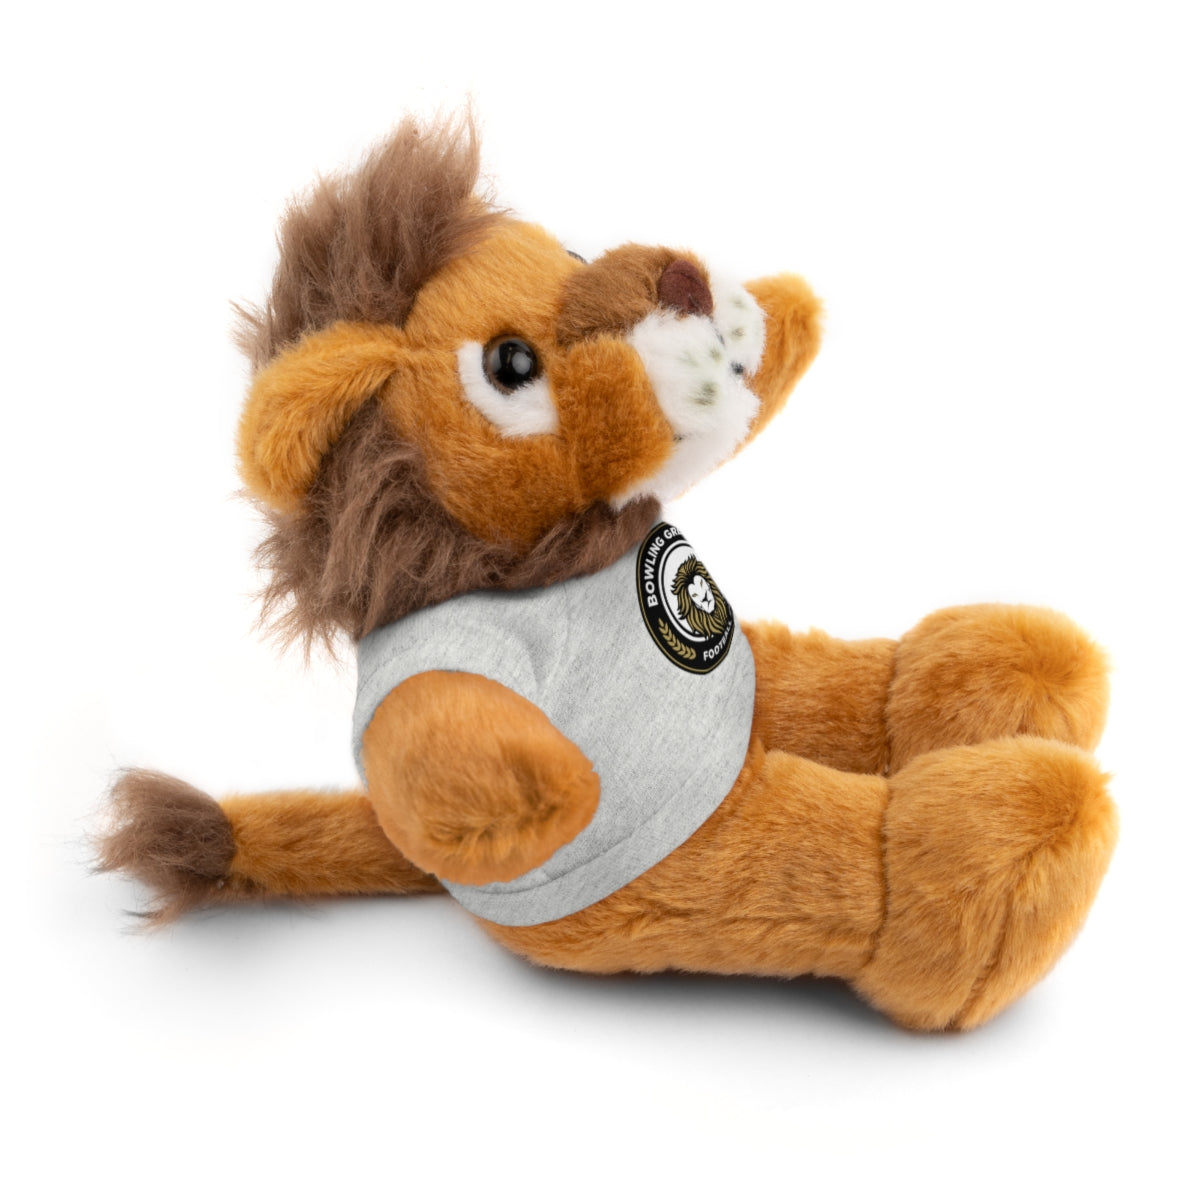 Stuffed Lion "Leo" with BGFC Tee